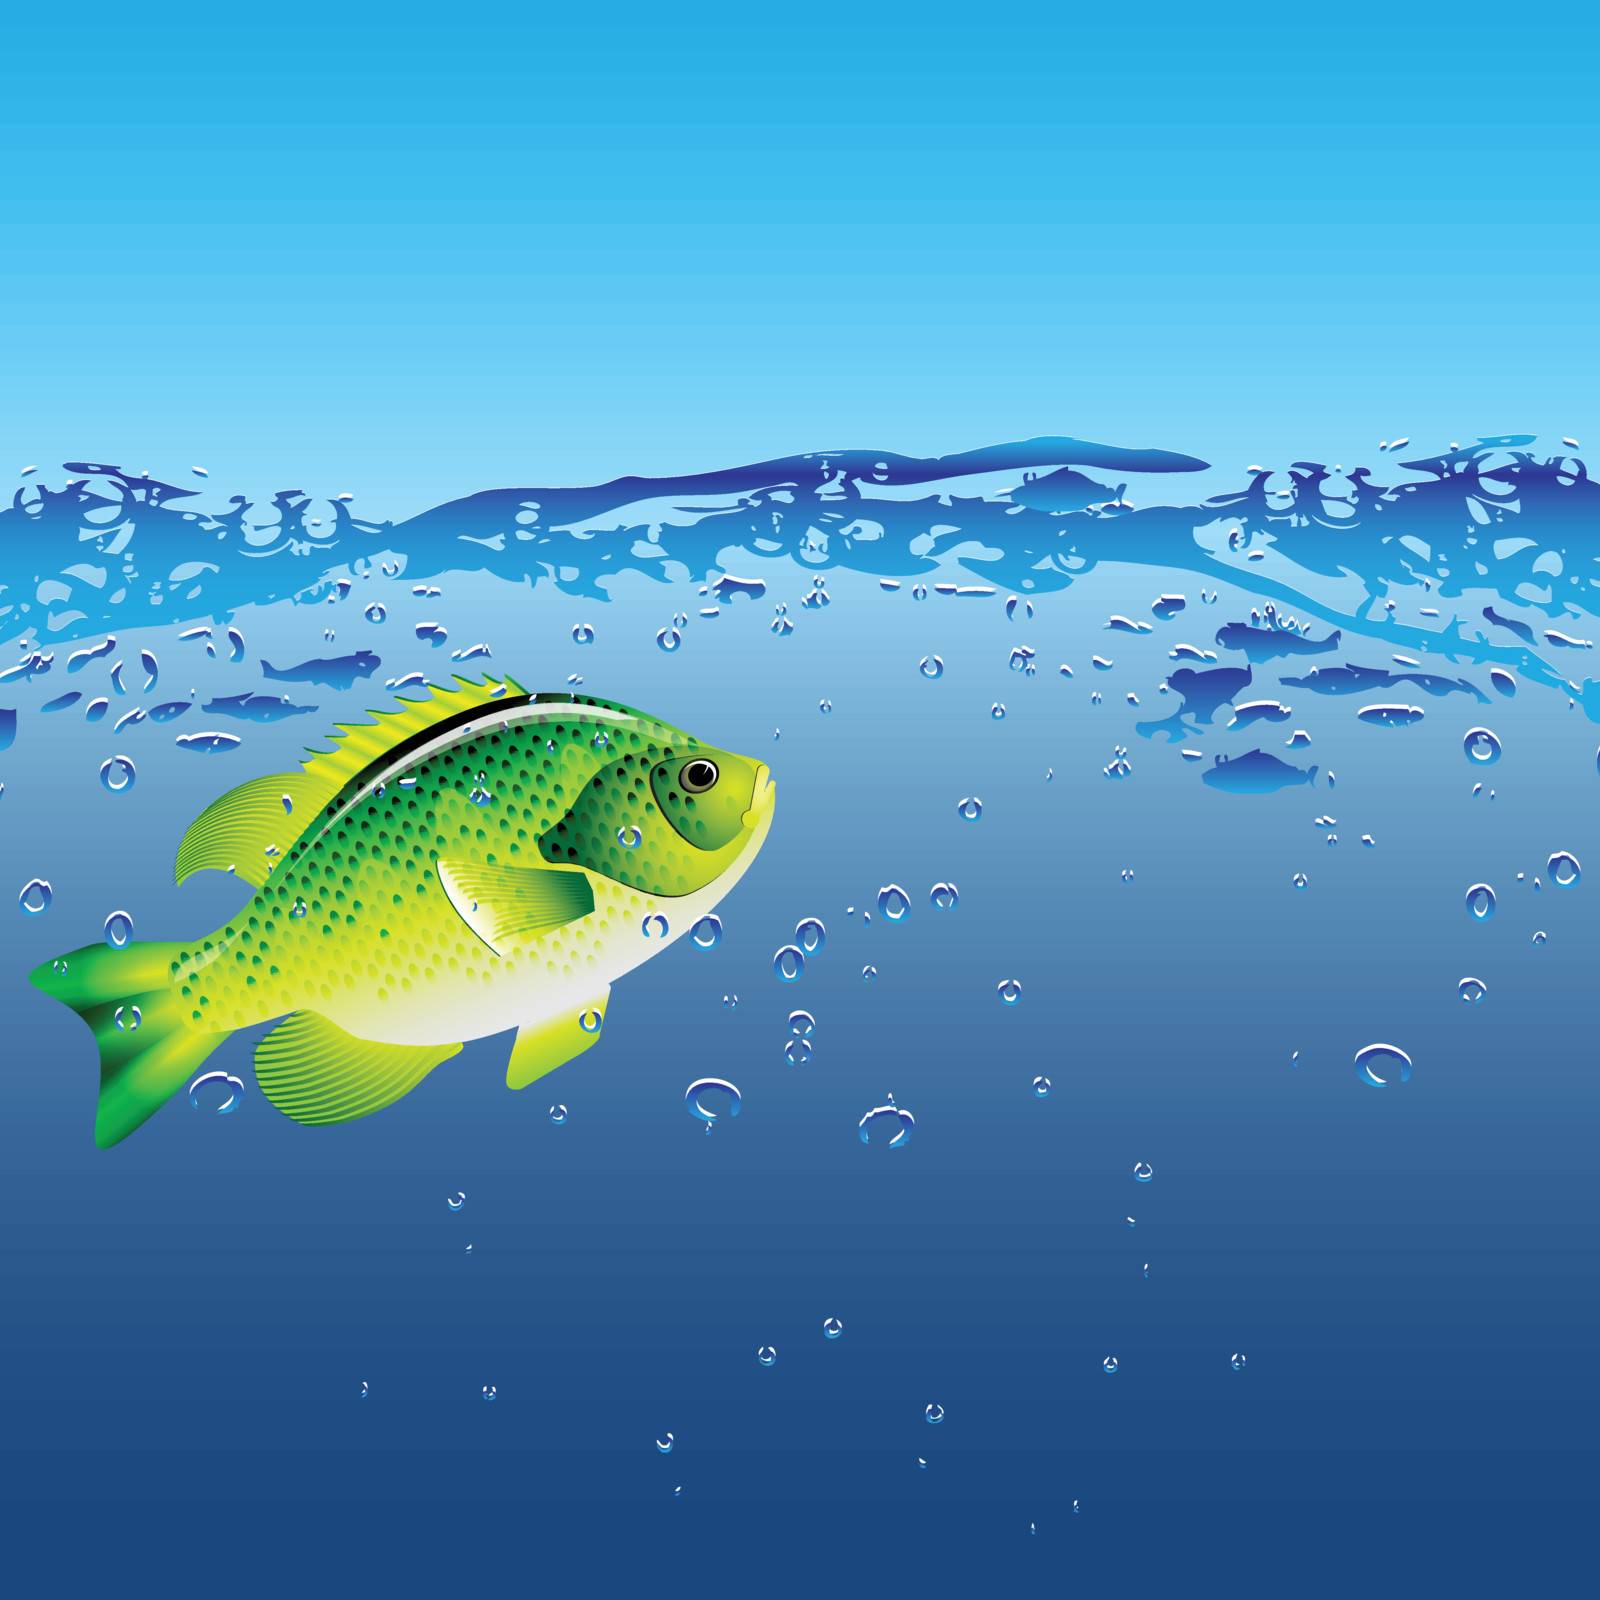 Fish in their natural habitat. Vector illustration.